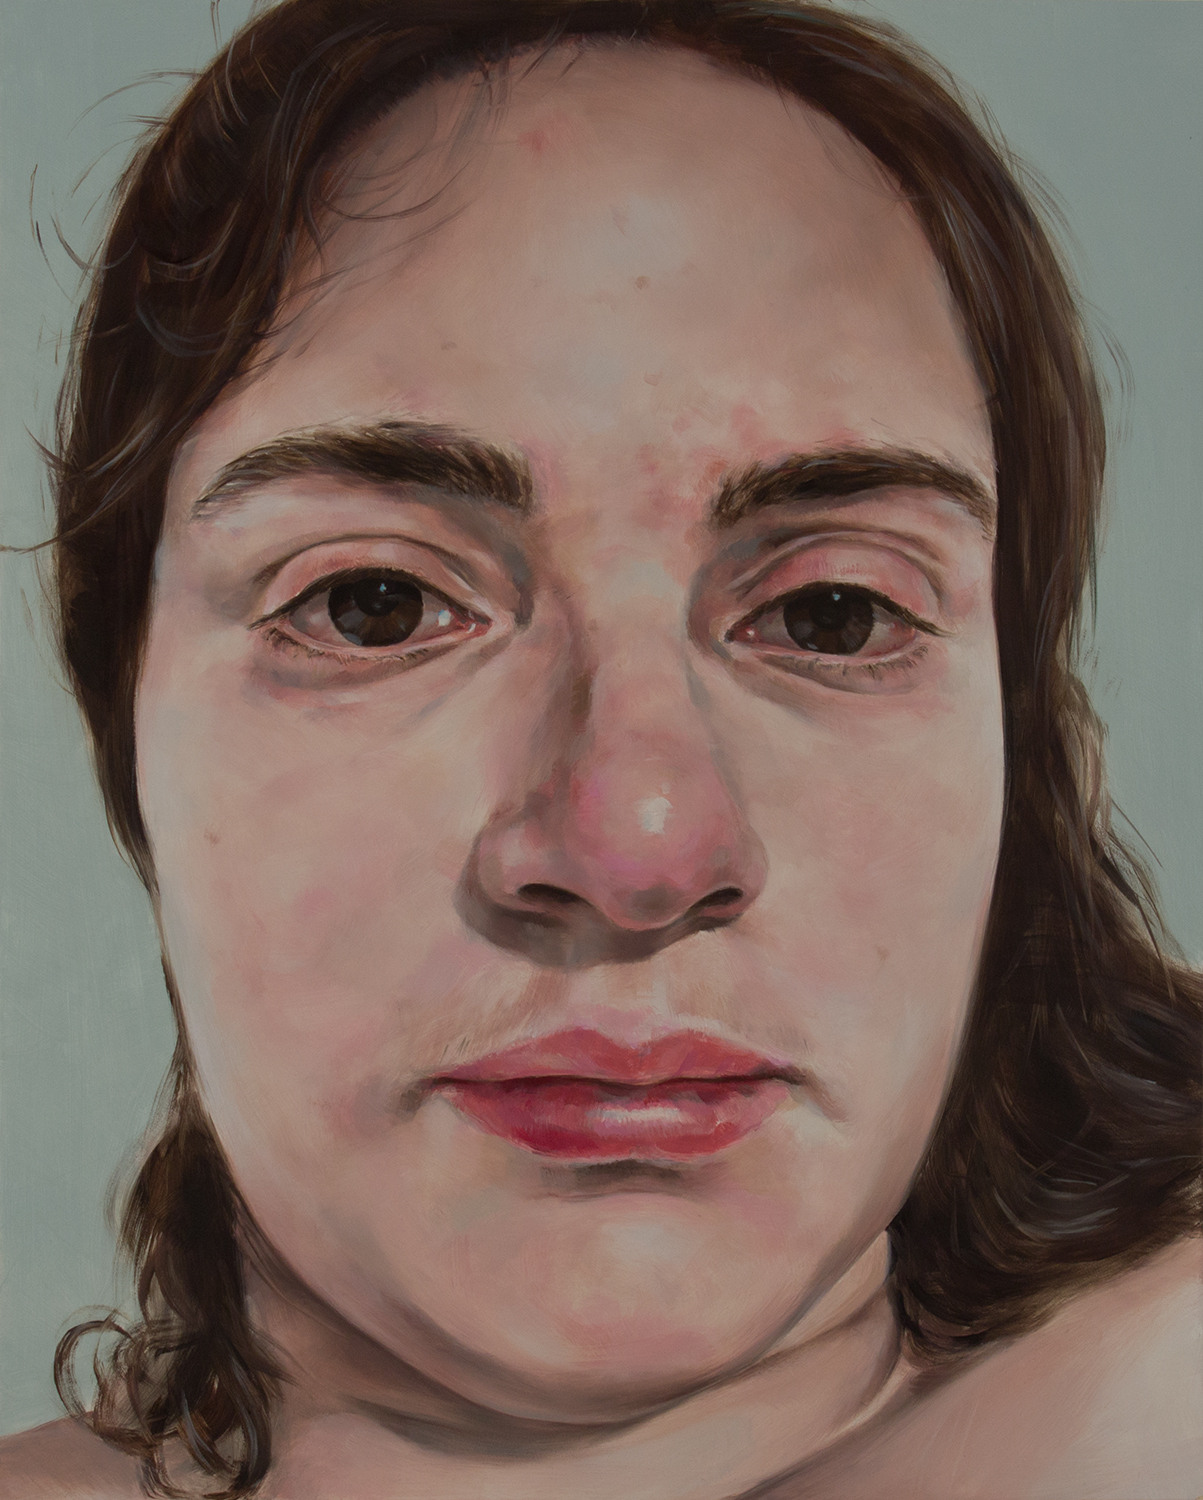   Anti-Selfie (Self-portrait III)   oil on wood  20" x 16," 2015   